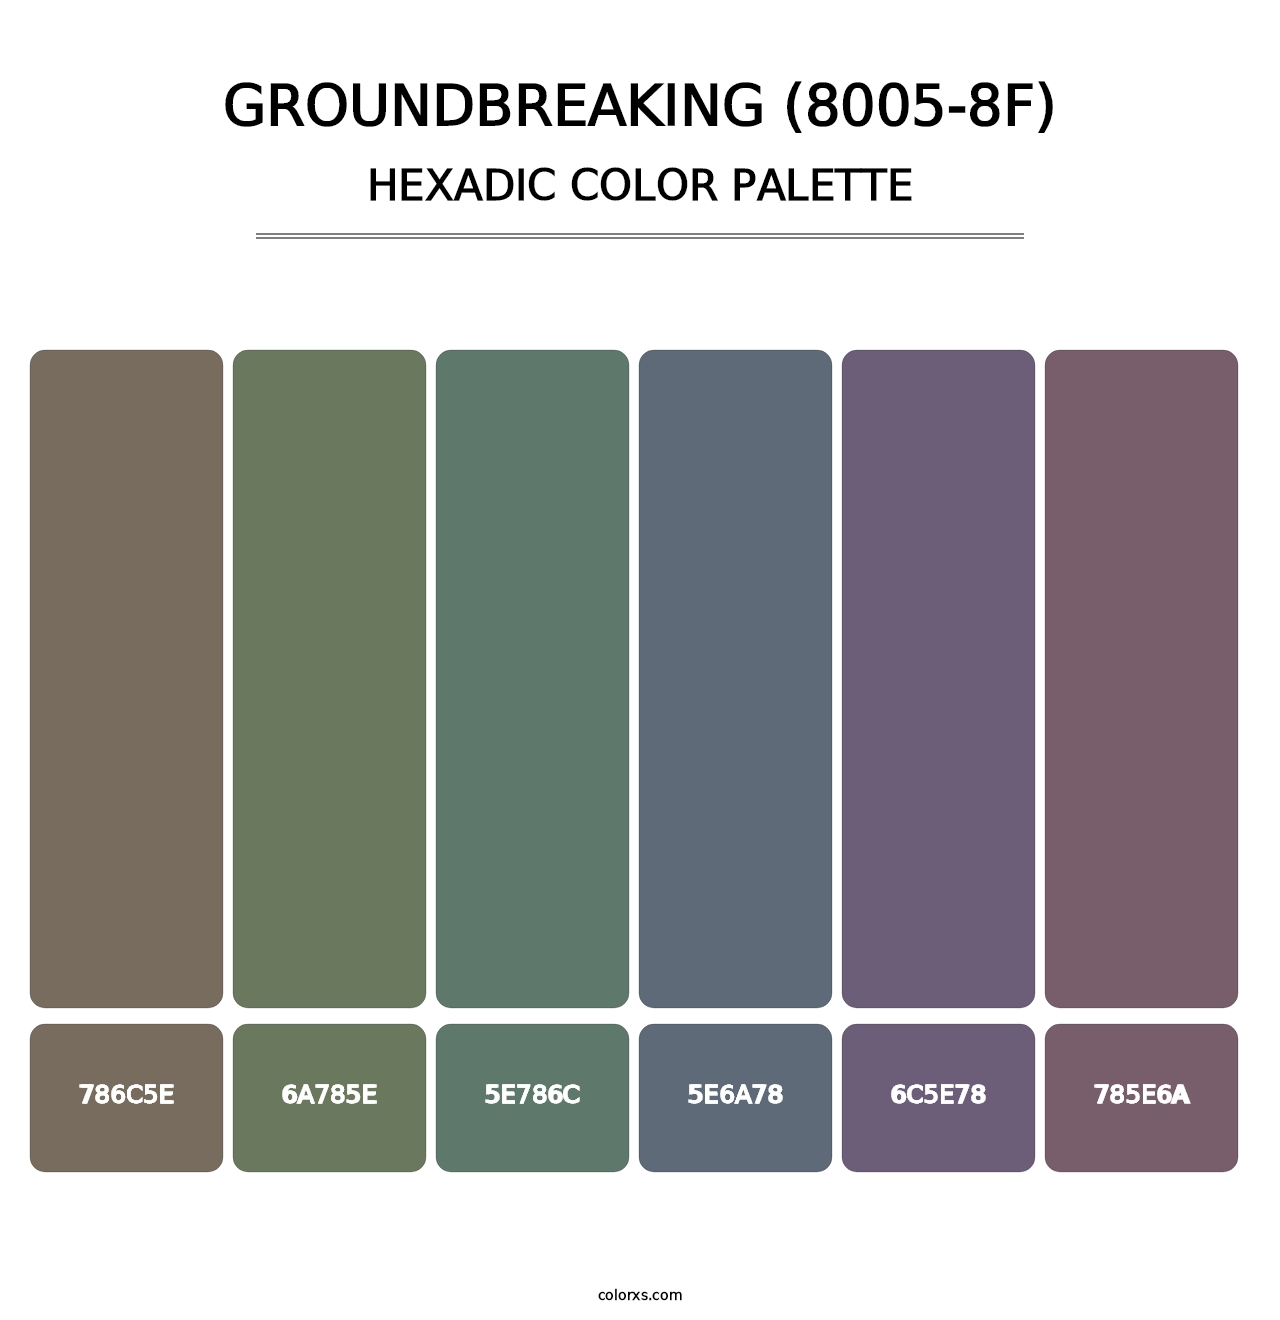 Groundbreaking (8005-8F) - Hexadic Color Palette